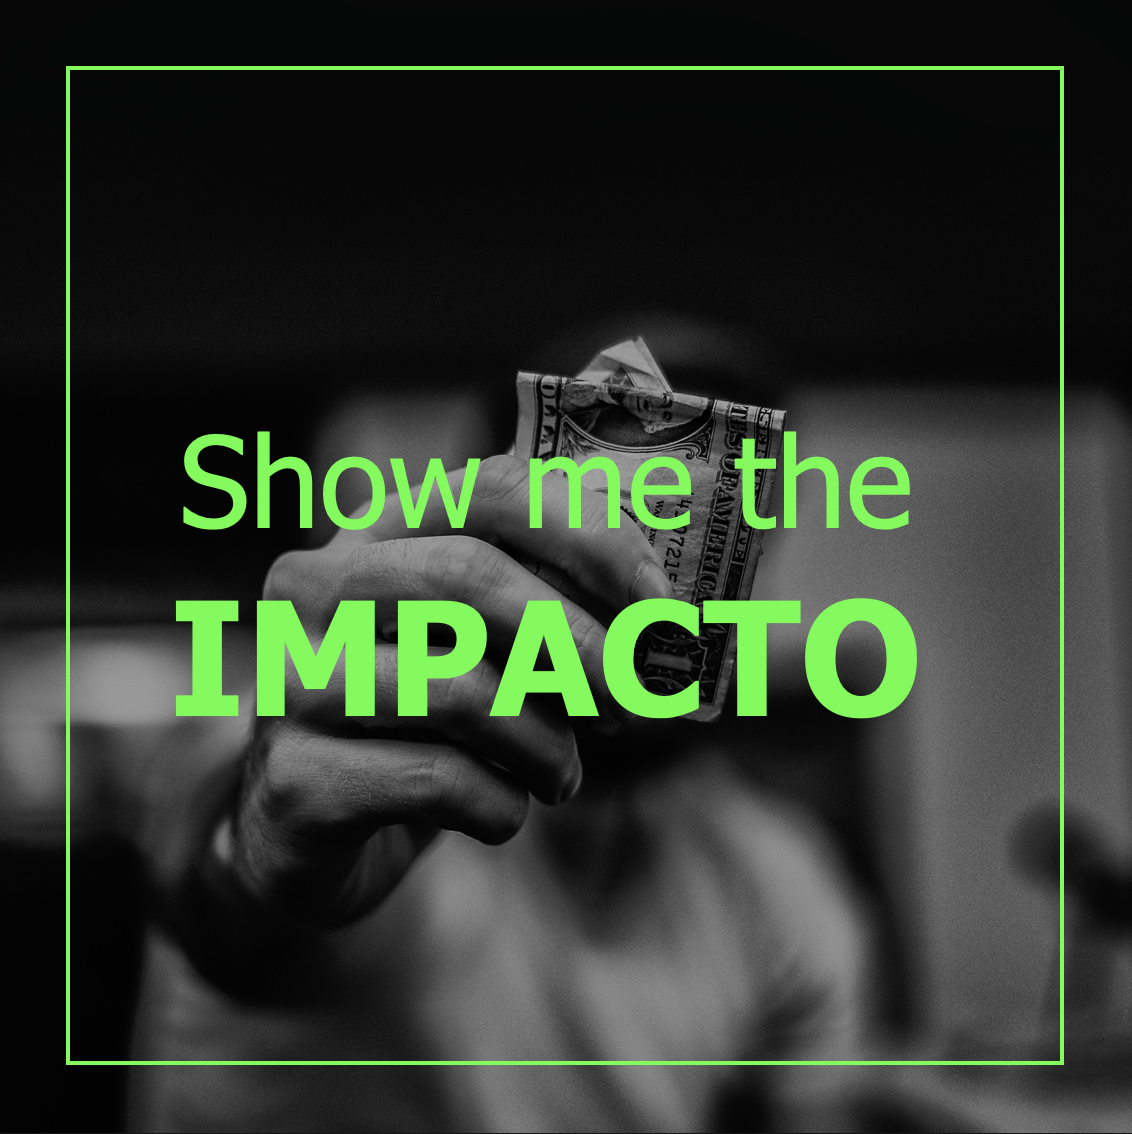 Show me the Impacto! Caratula verde